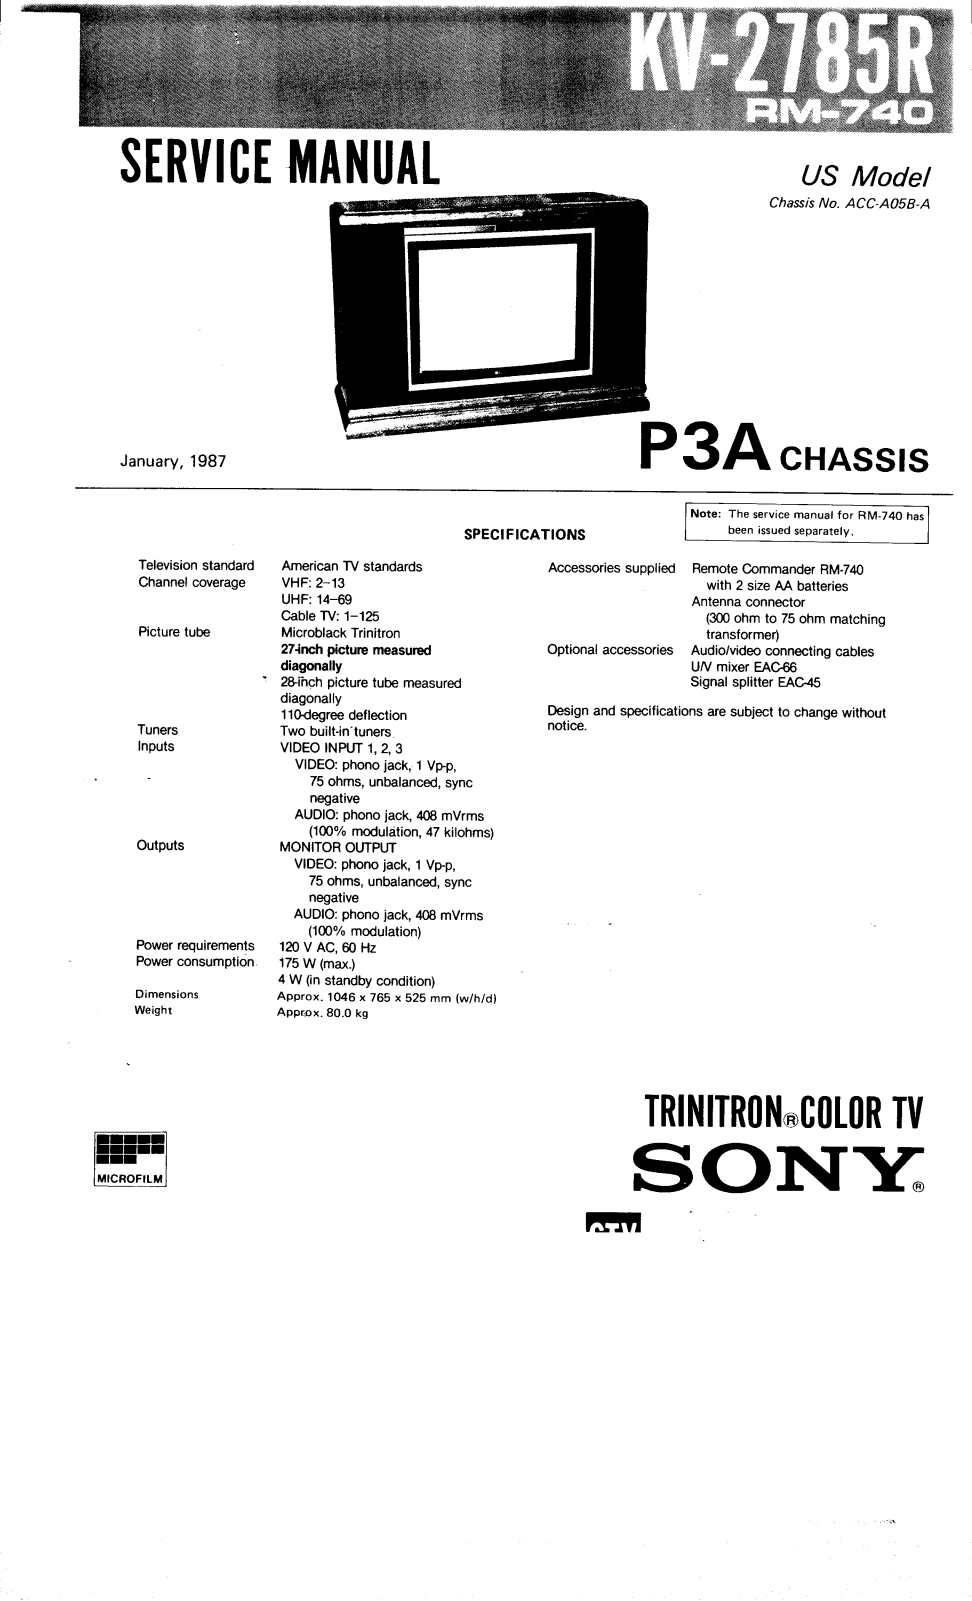 Sony KV-2785R Service Manual